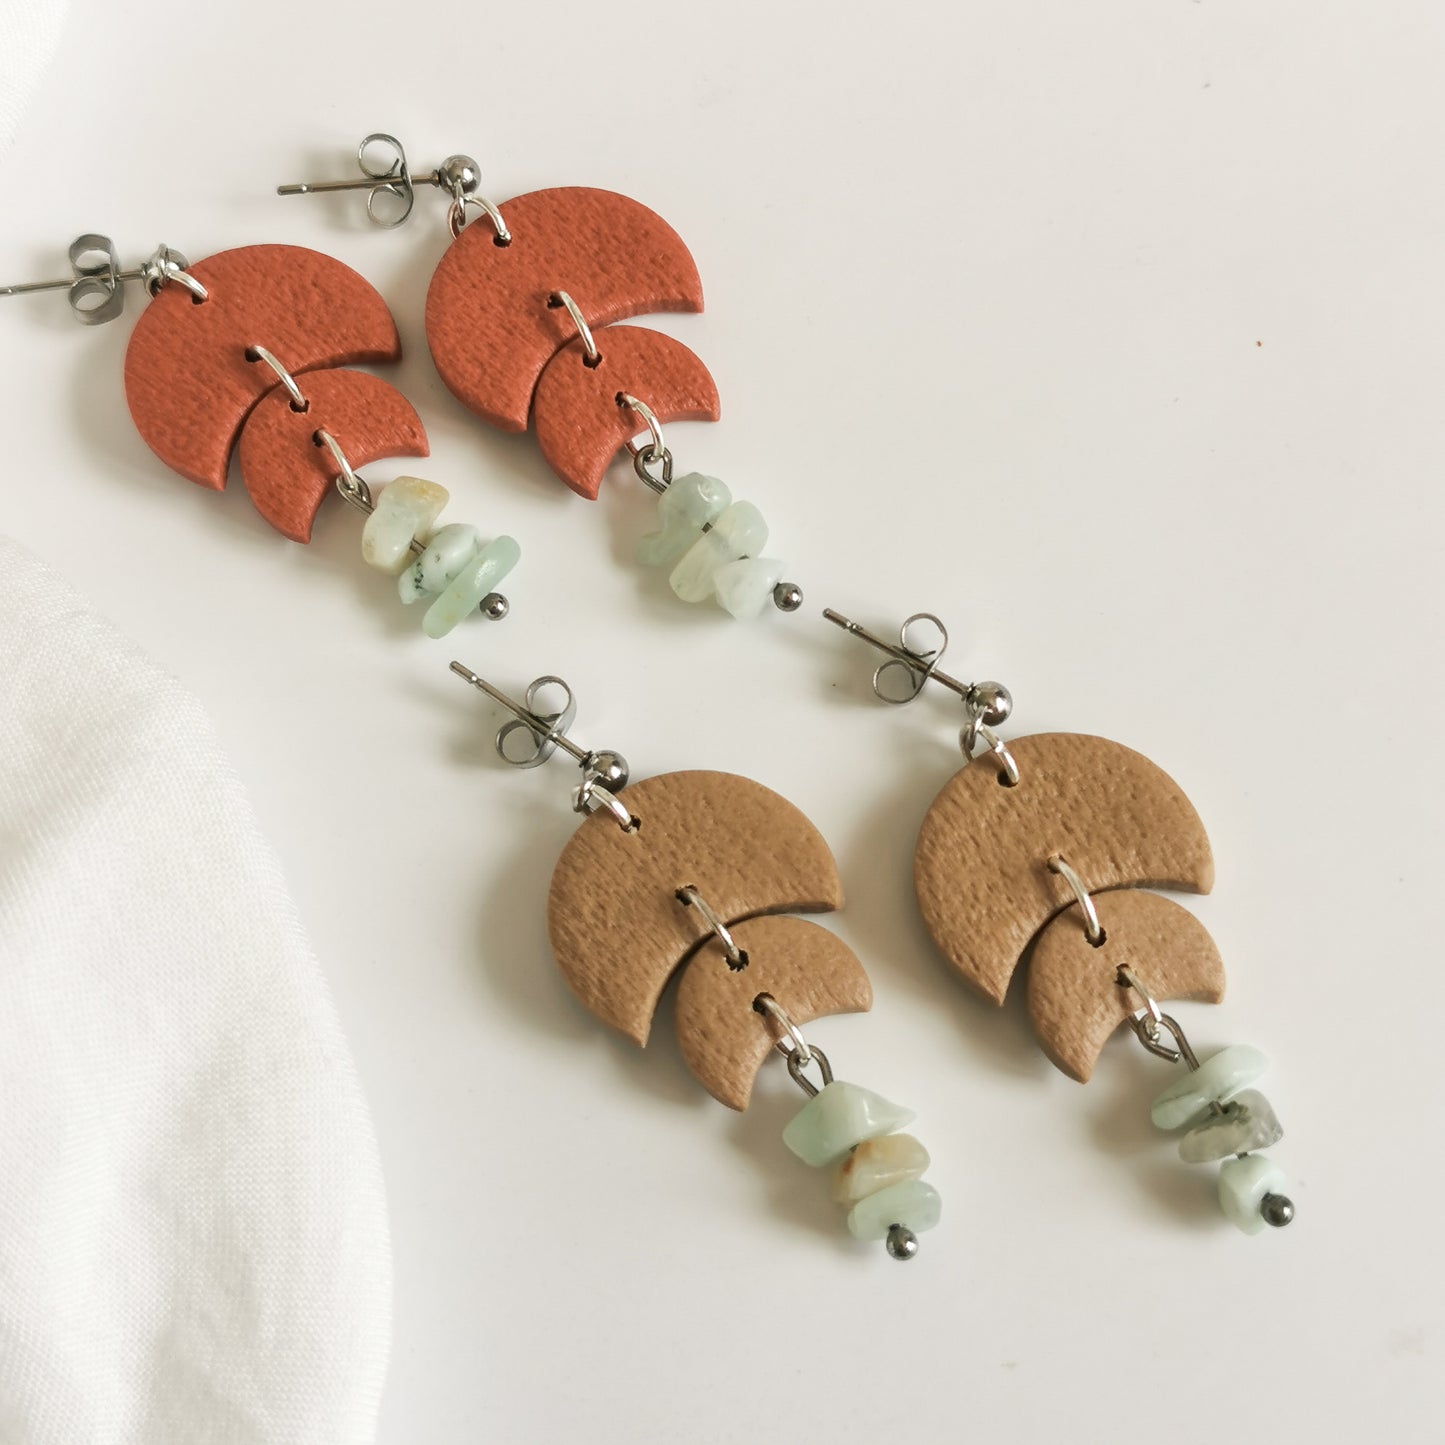 Handmade Jewellery NZ | Small Batch, Handmade Earrings By Arias Design Co